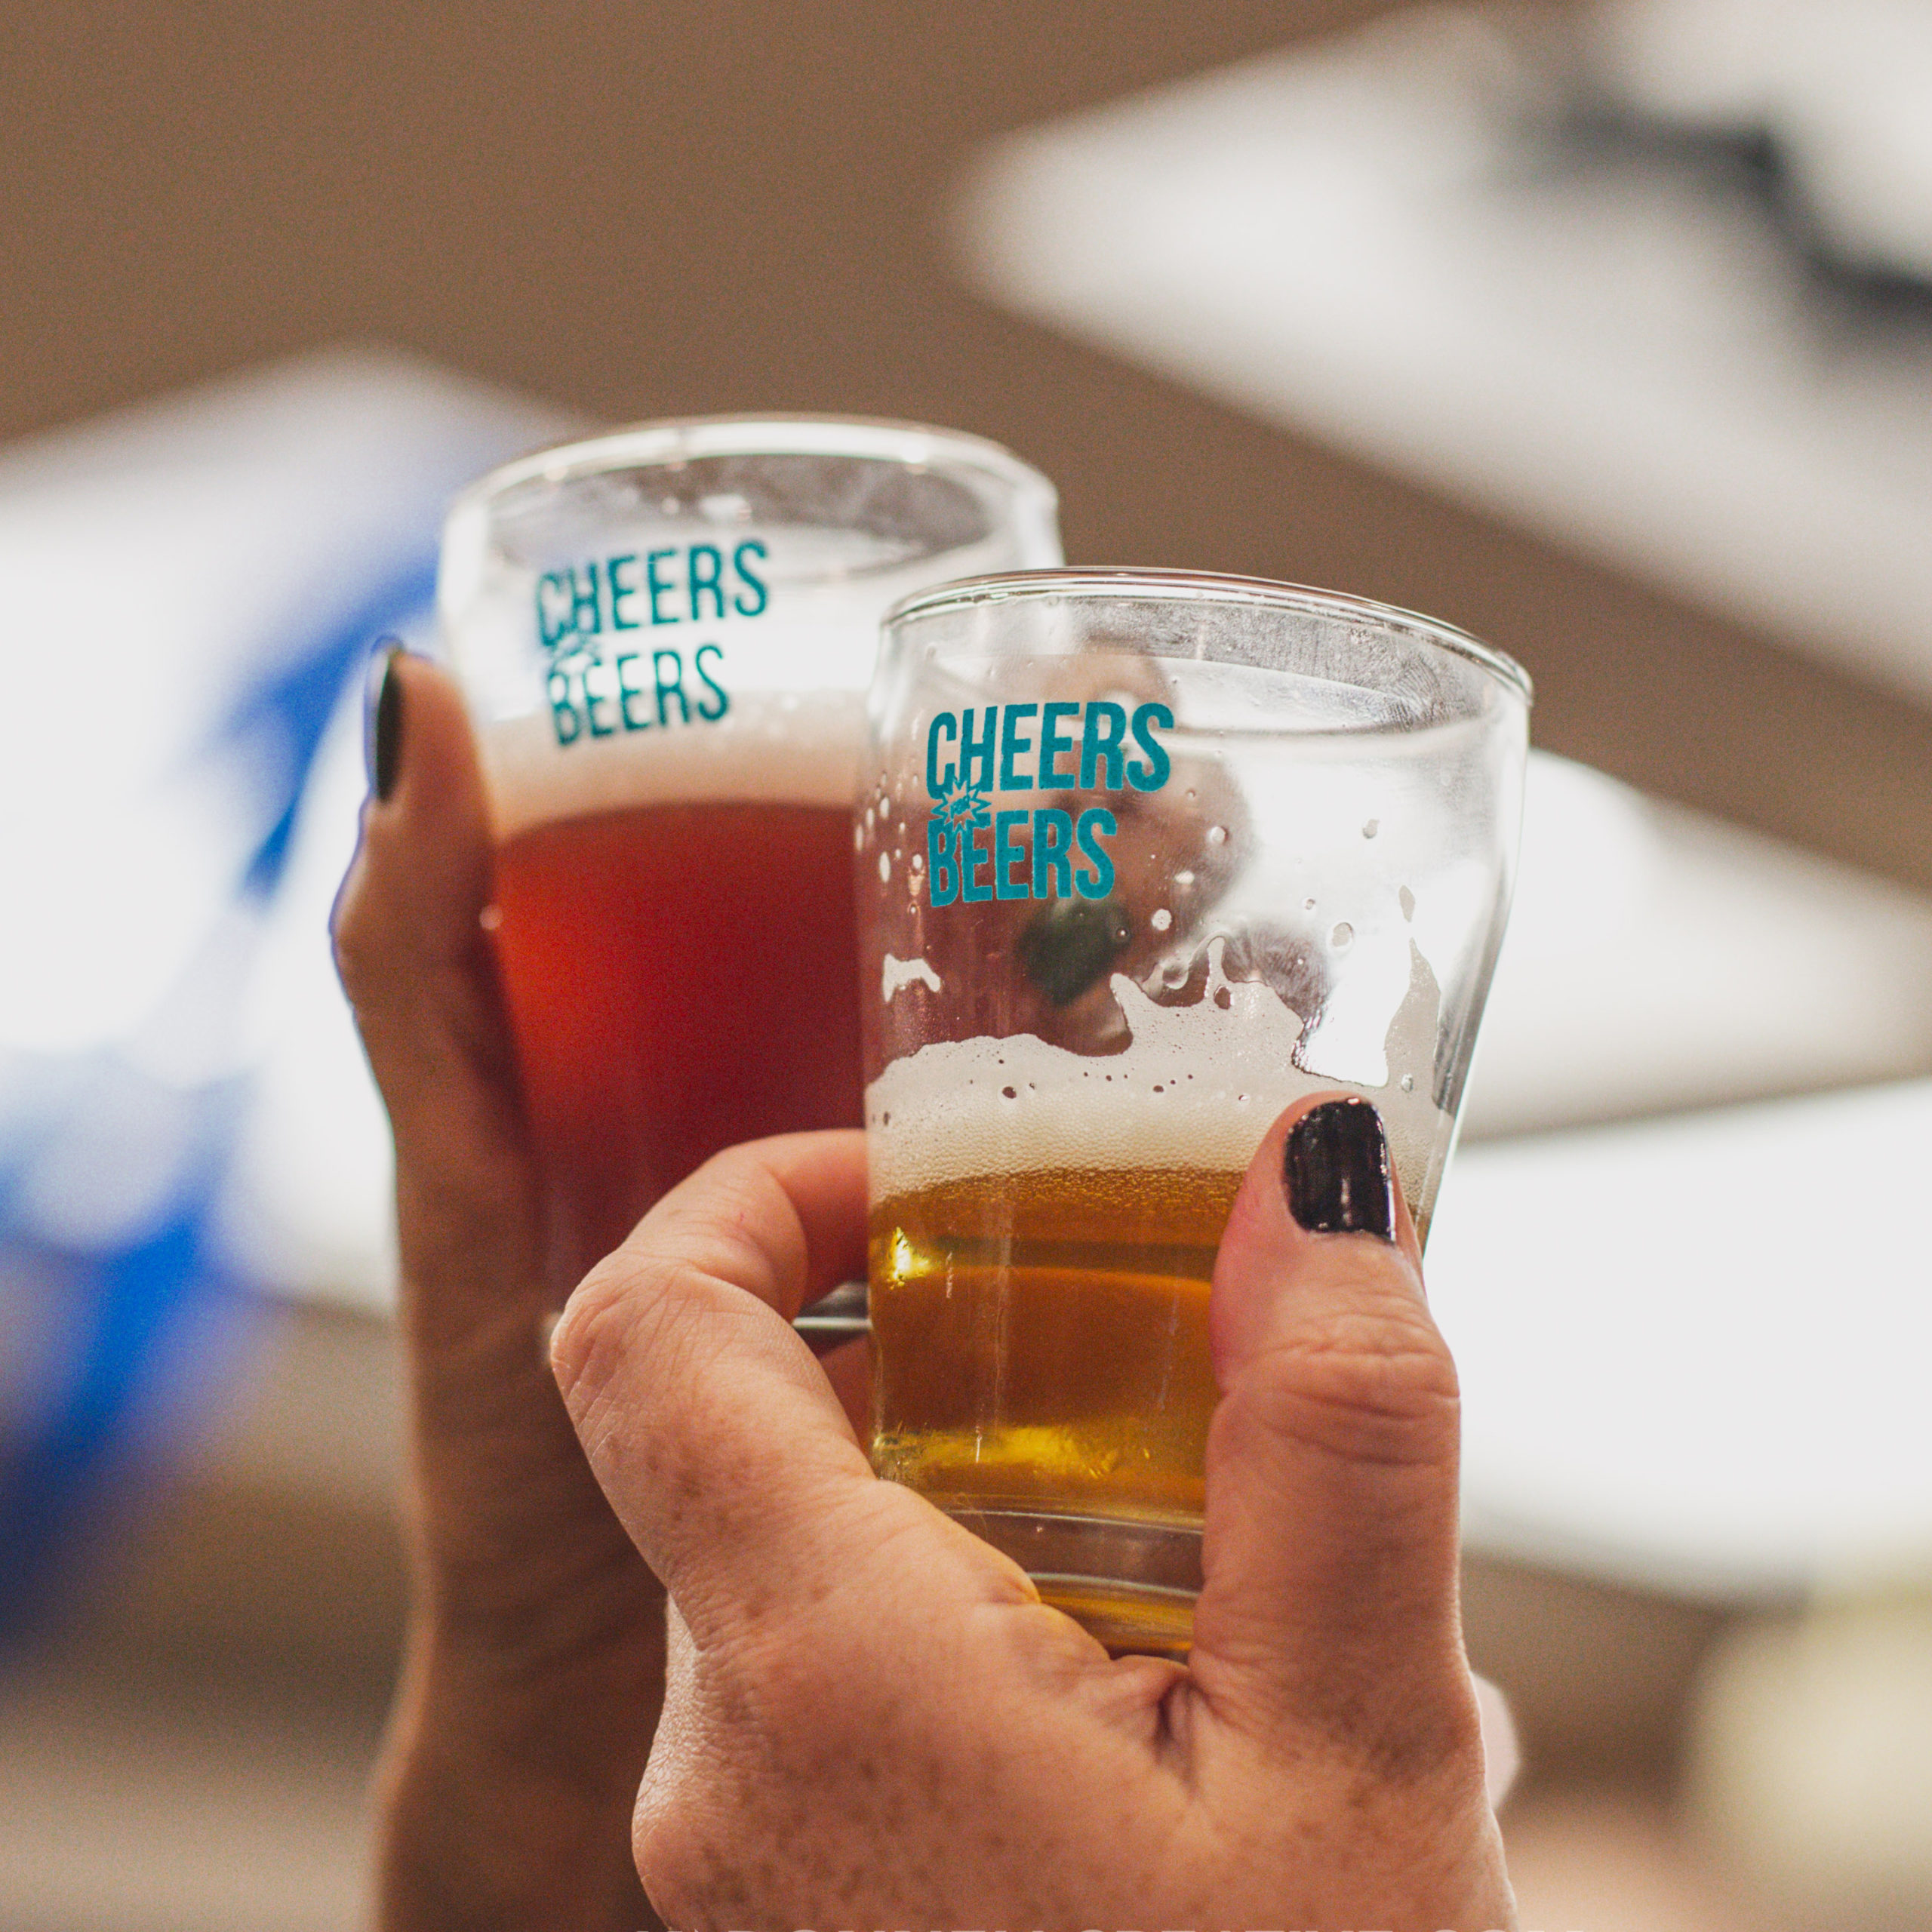 Cheers for Beers sampling glasses raised in a toast